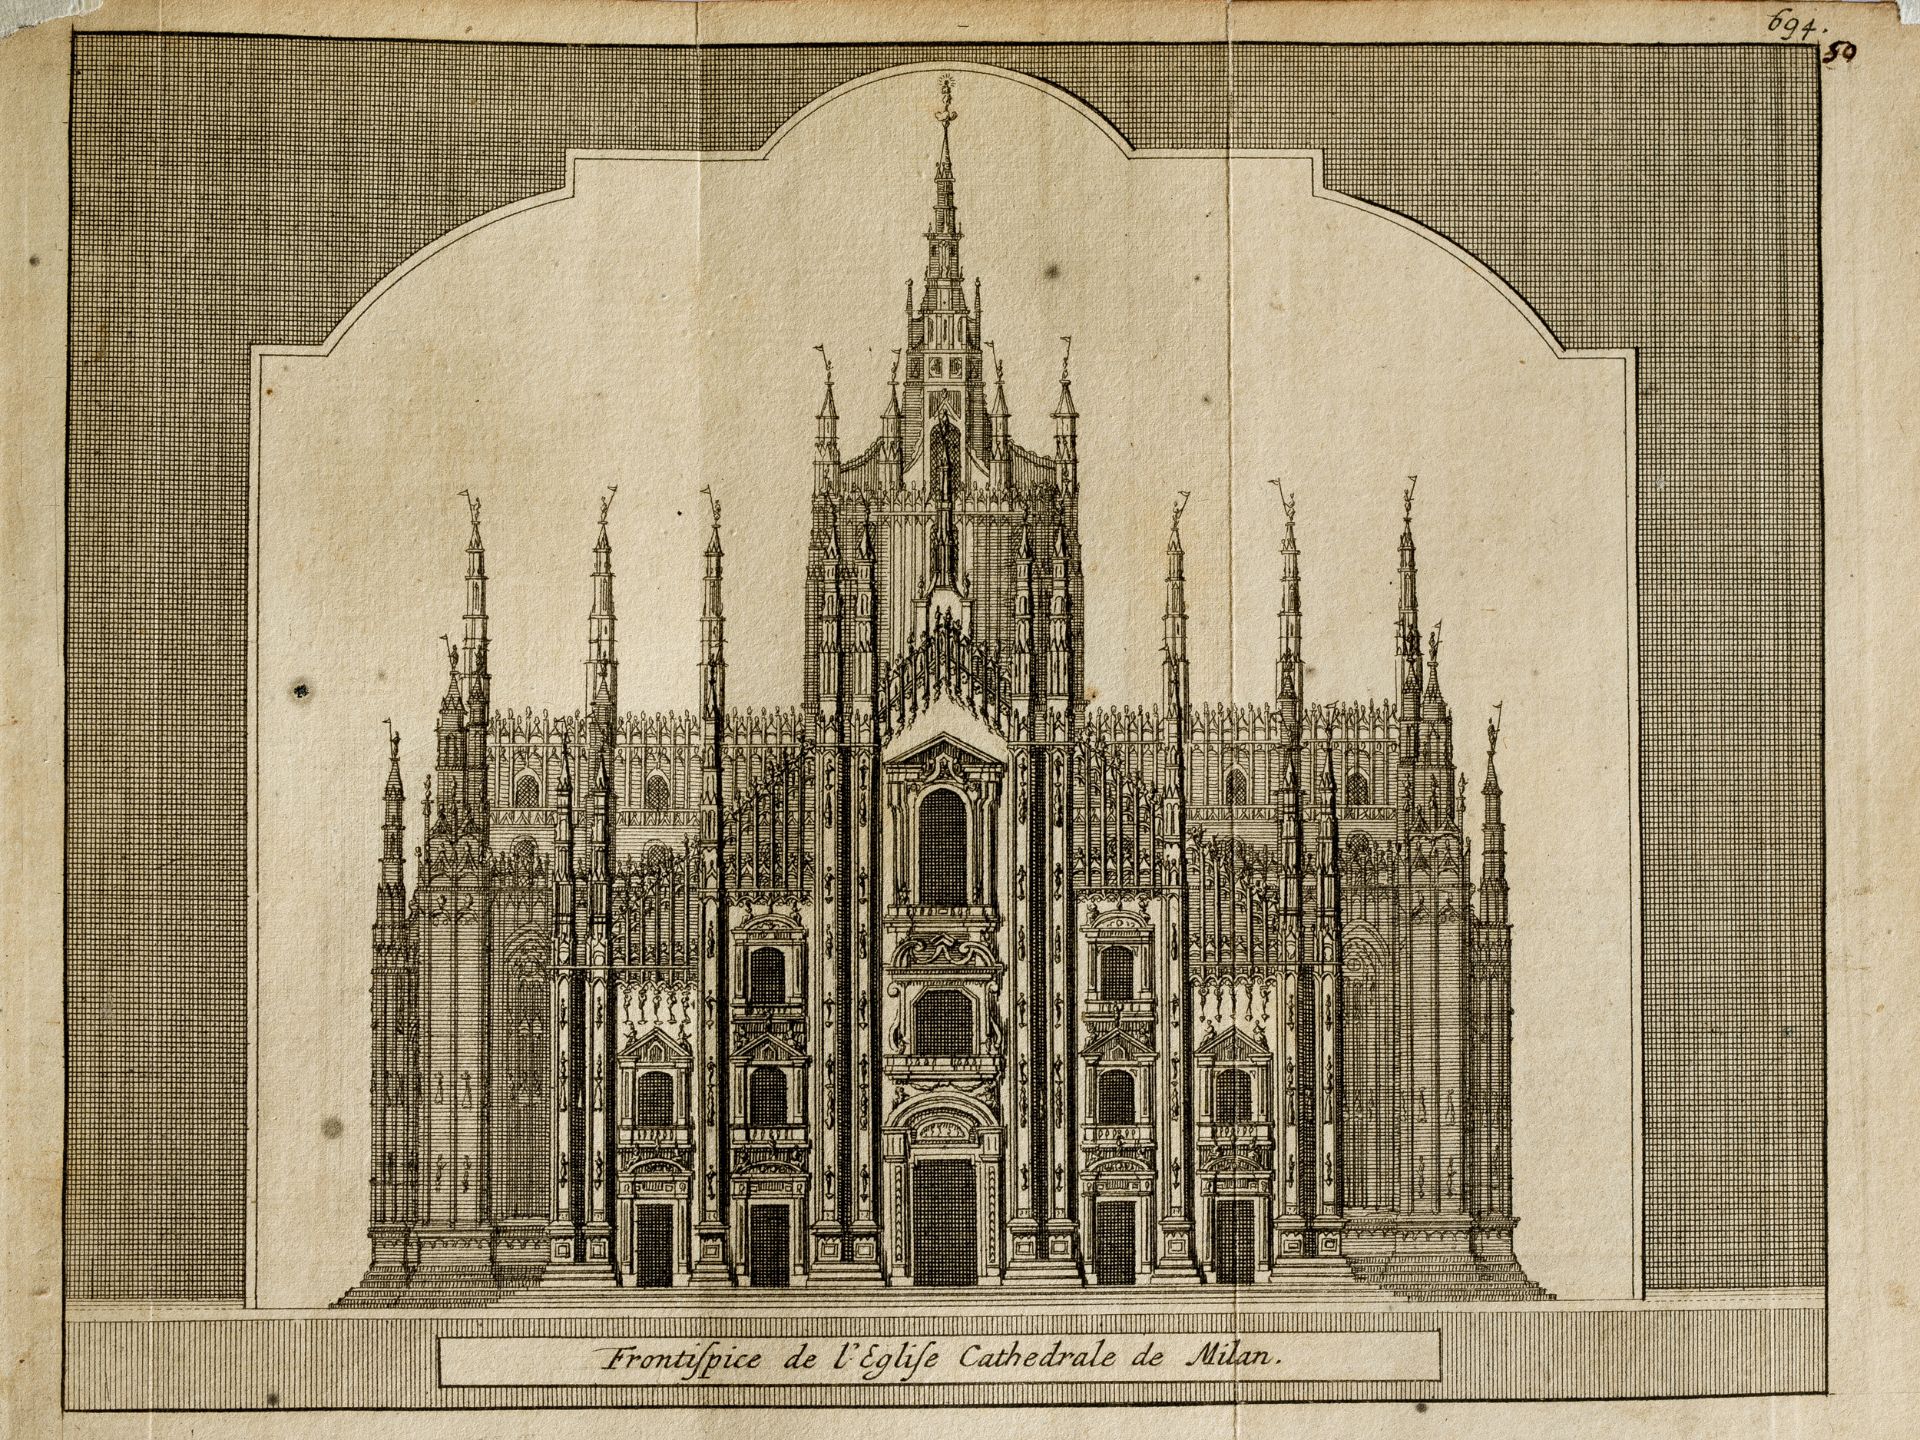 "Frontispice de l'Eglise Cathedrale de Milan", From: Alexandre de Rogissart